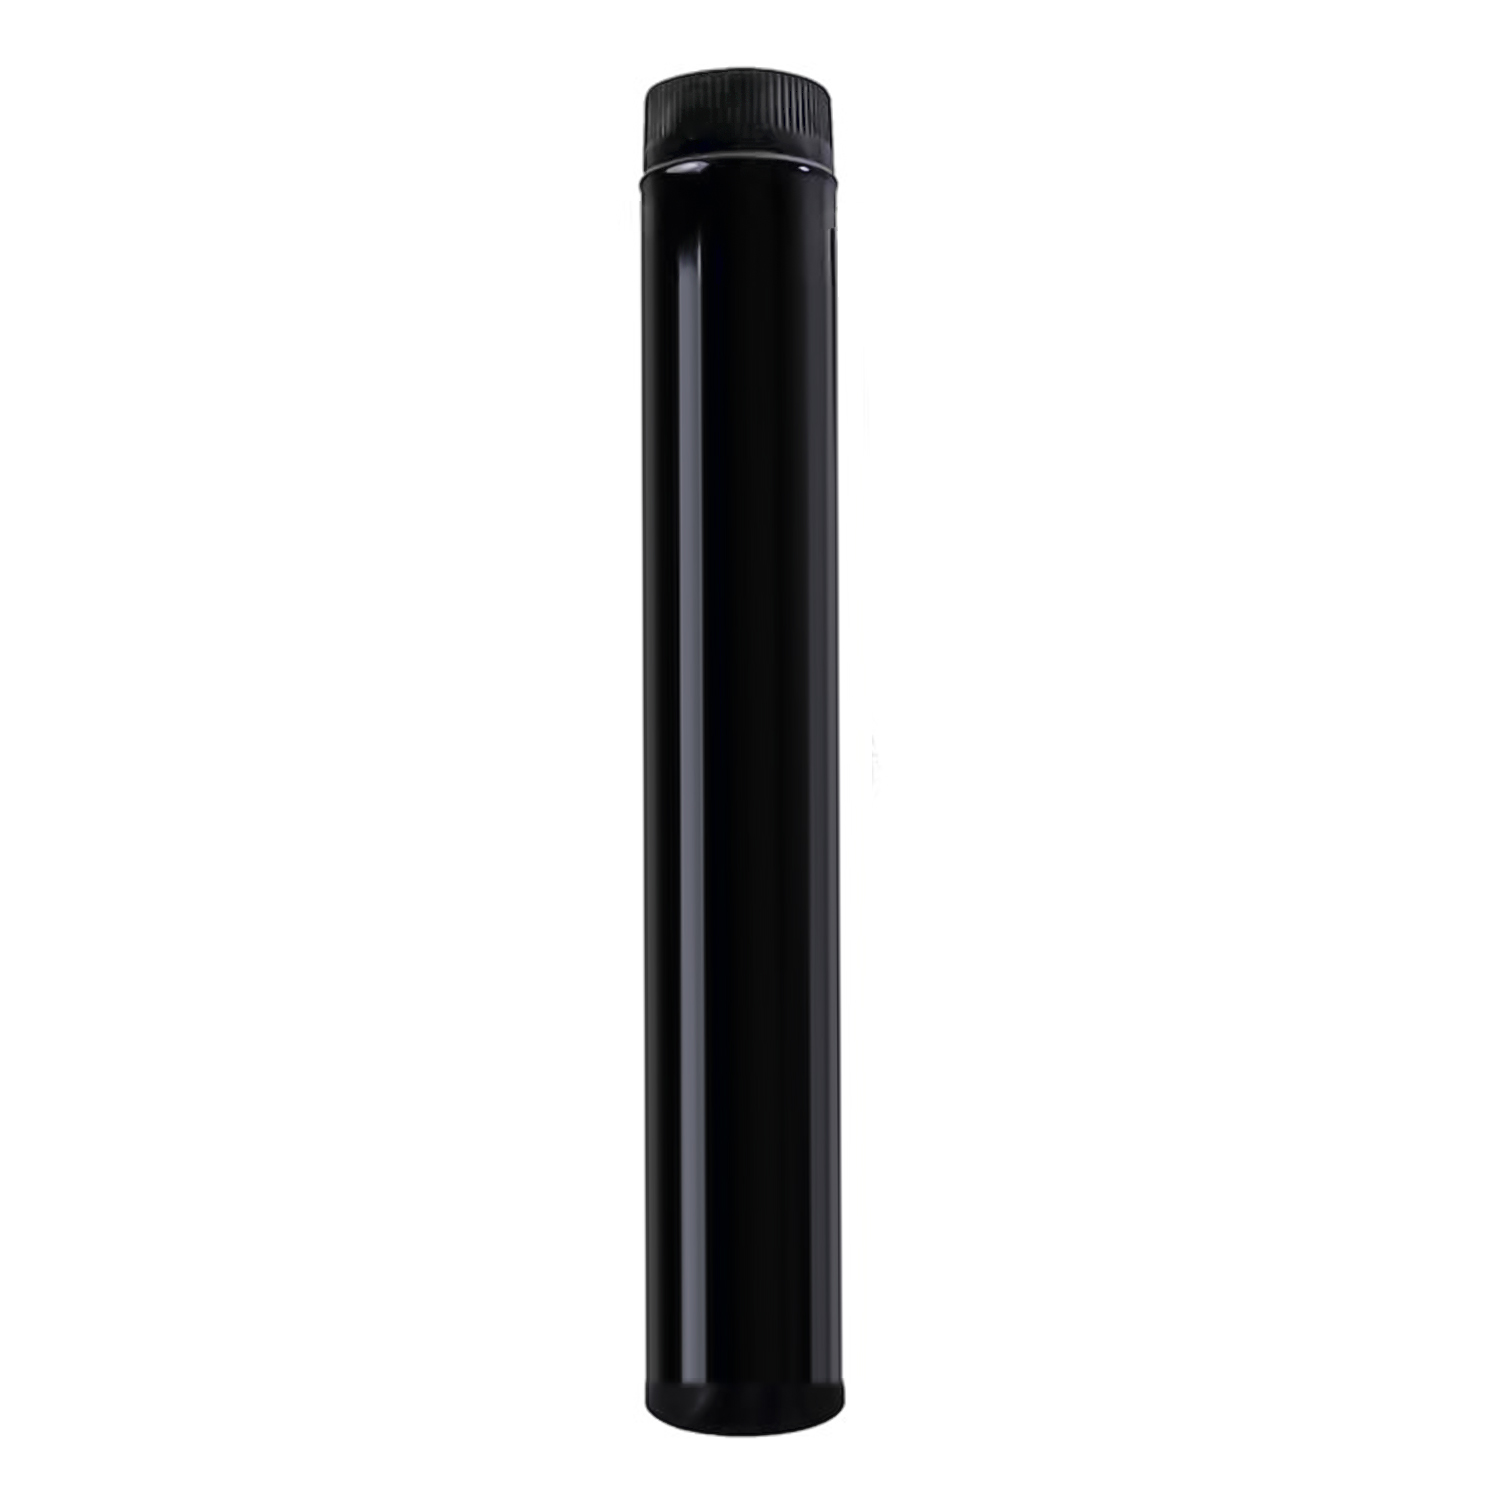 Wolfpack Tubo de Estufa Acero Vitrificado Negro Ø 120 mm. Ideal Estufas de Leña, Chimenea, Alta resi